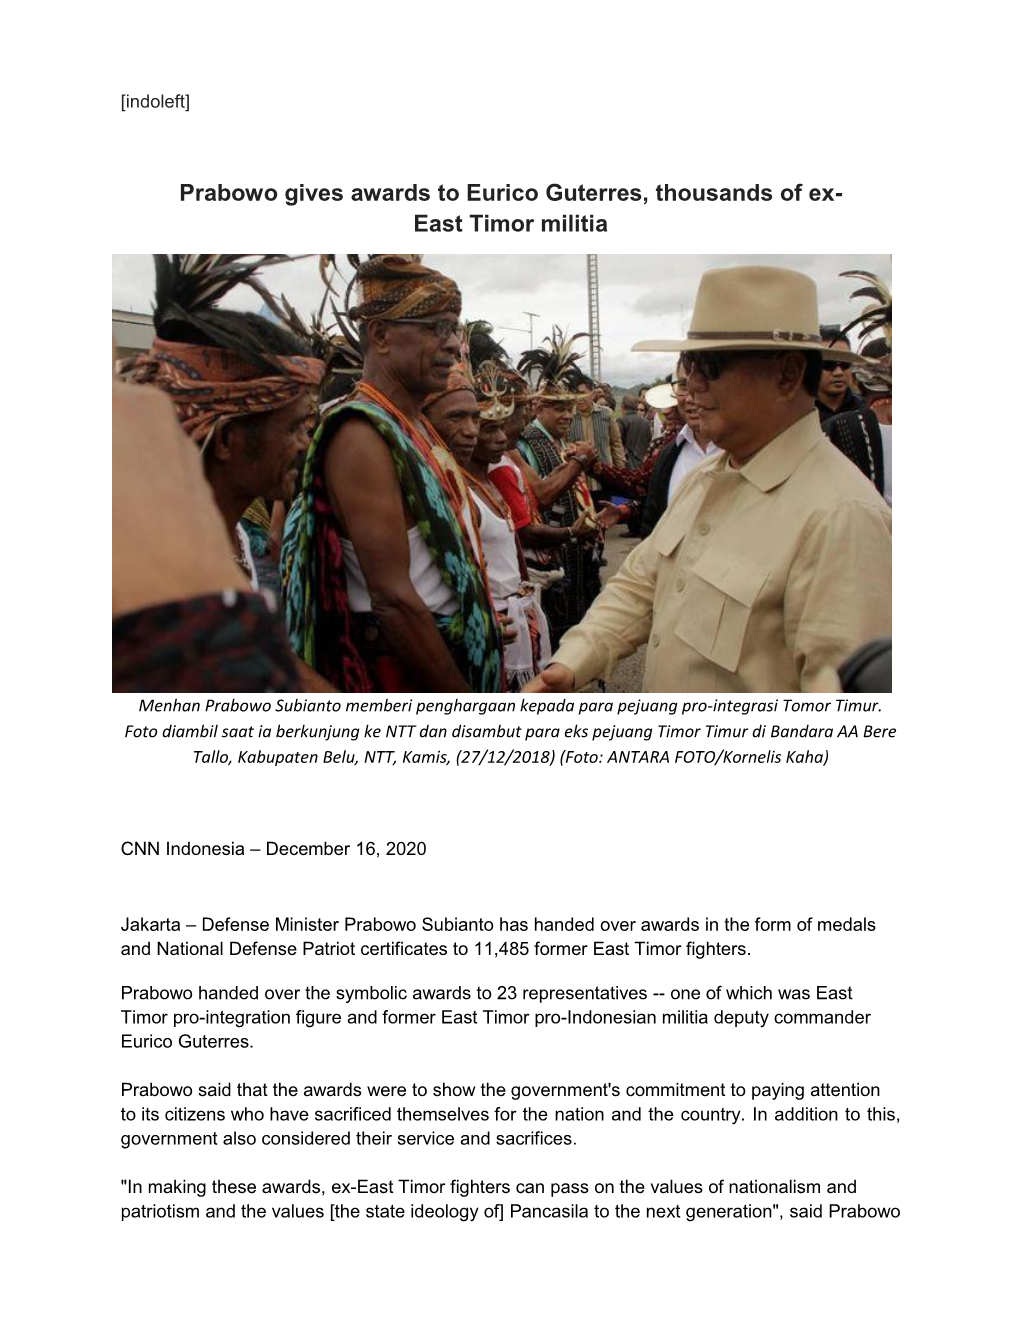 Prabowo Gives Awards to Eurico Guterres, Thousands of Ex- East Timor Militia